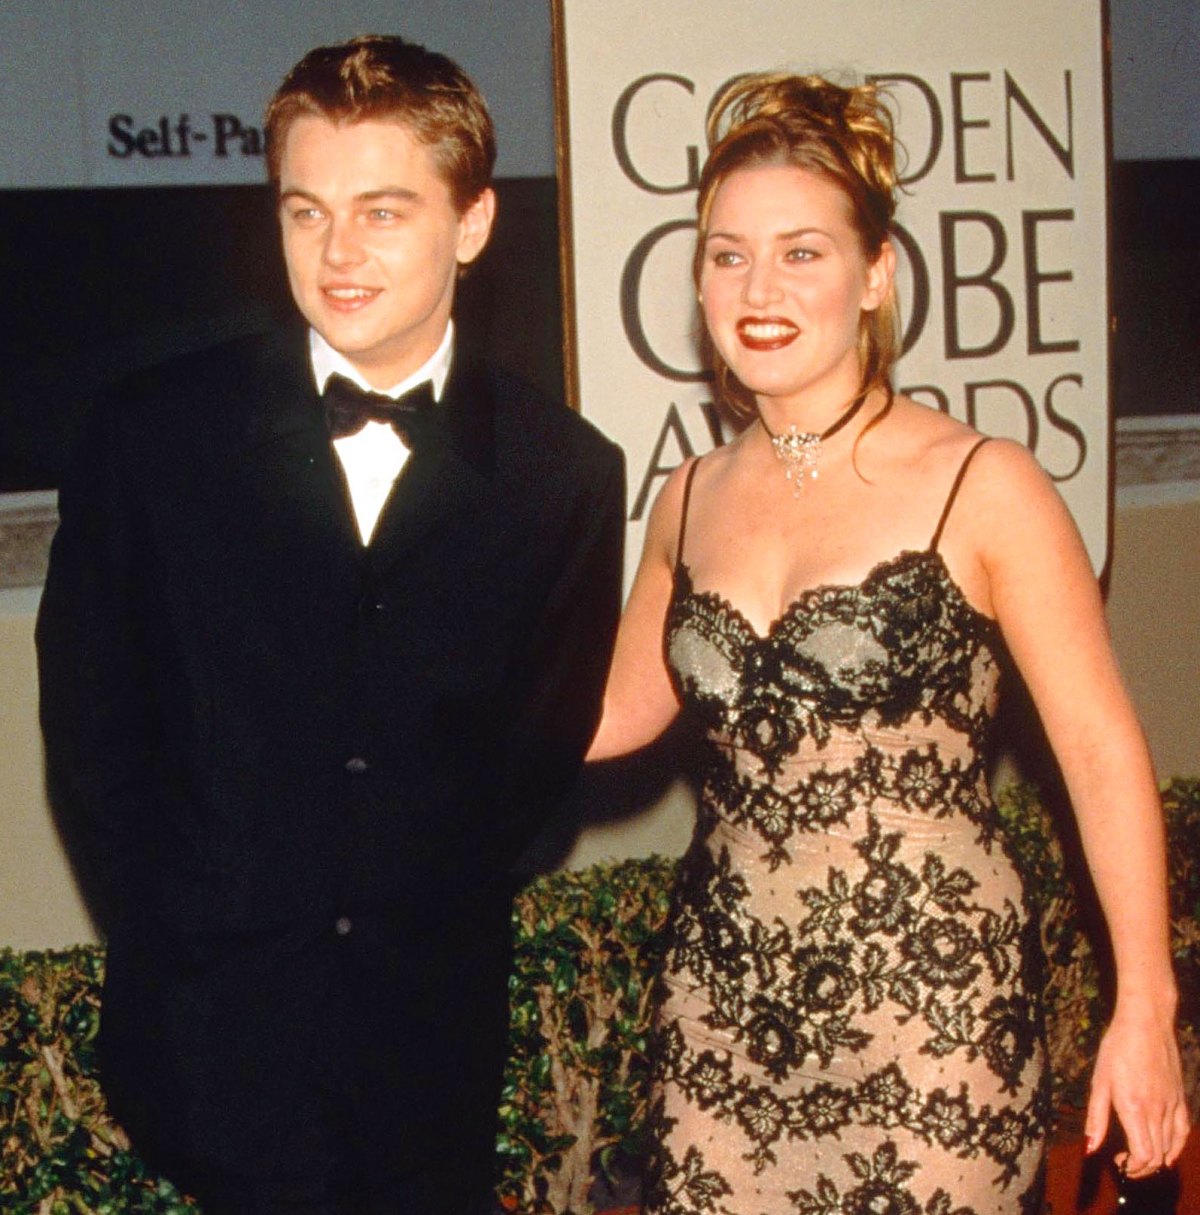 Leonardo and Kate Winslet's Friendship Through the Years